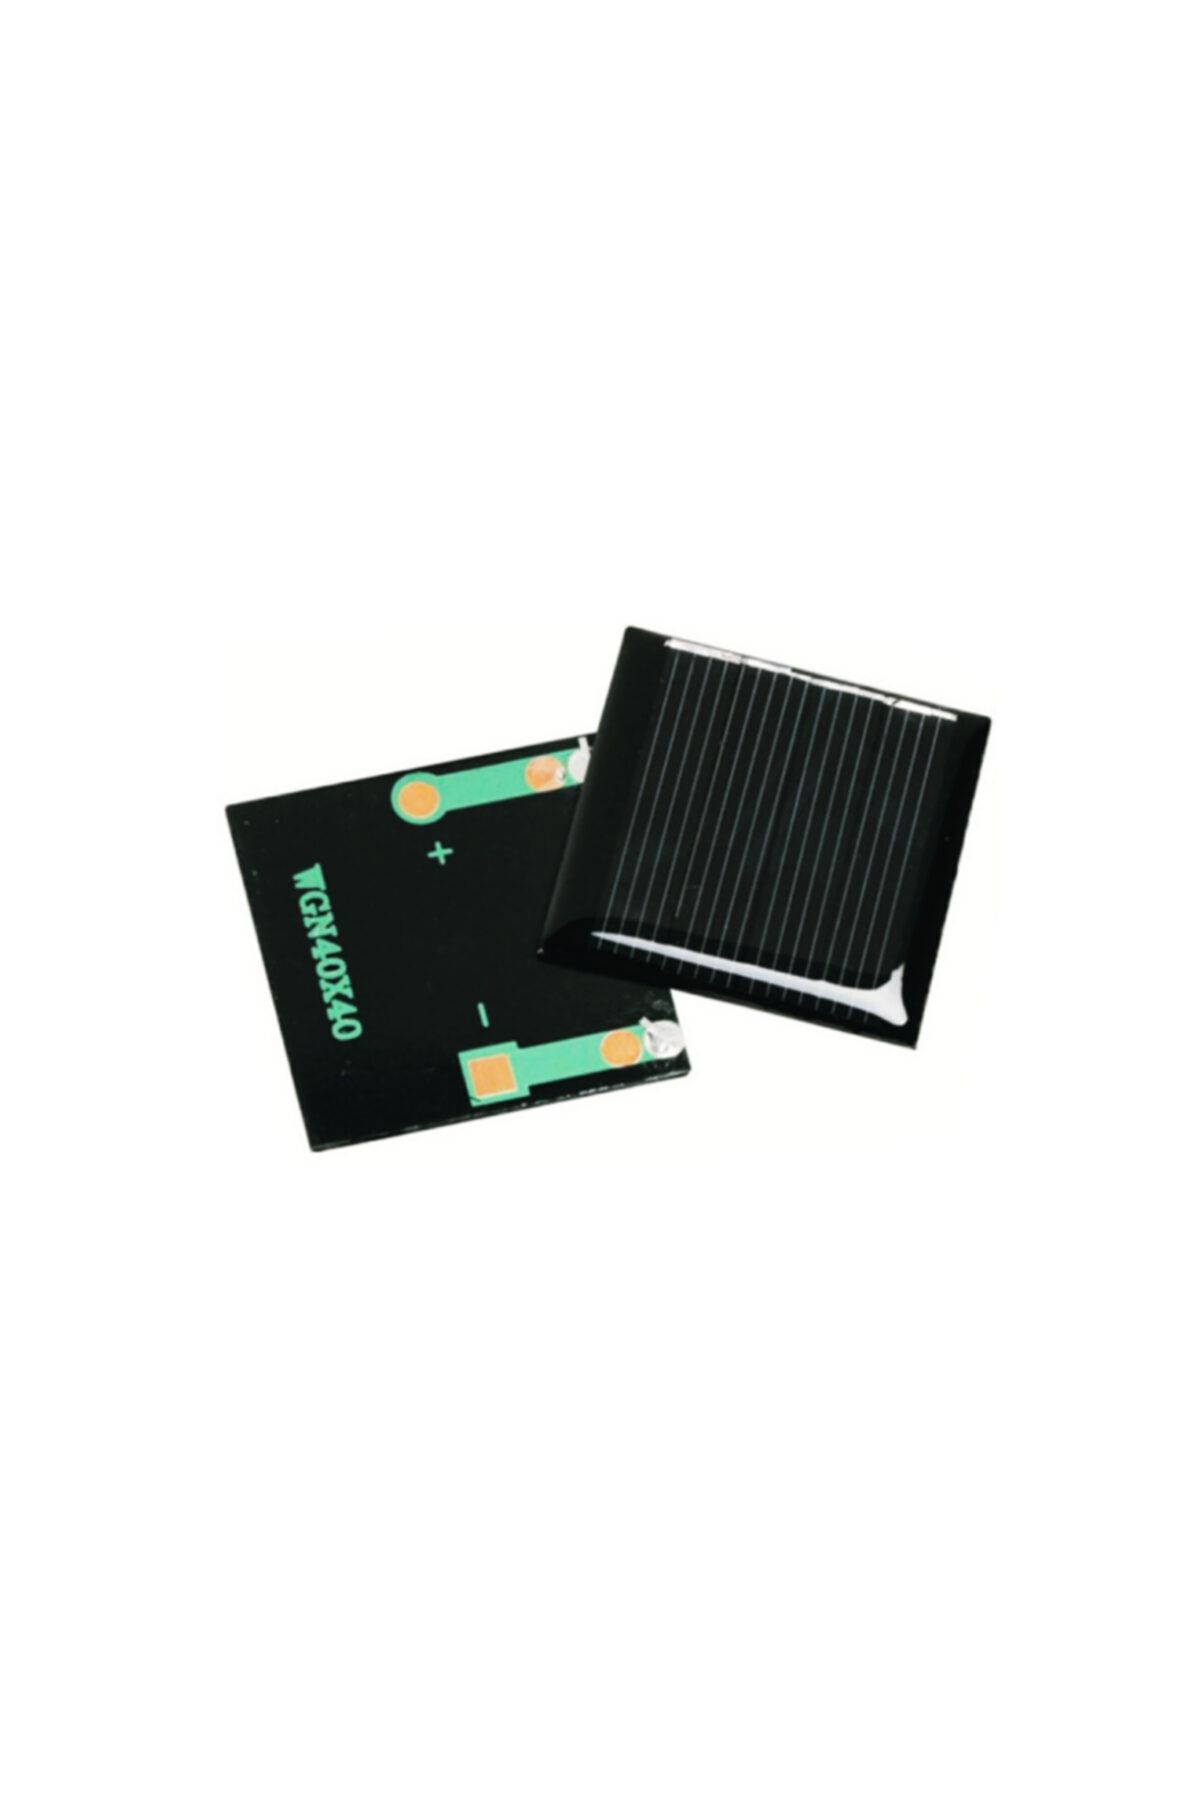 FAV 1.5v 100 Mah Mini Güneş Paneli - Solar Panel 59mmx49mm